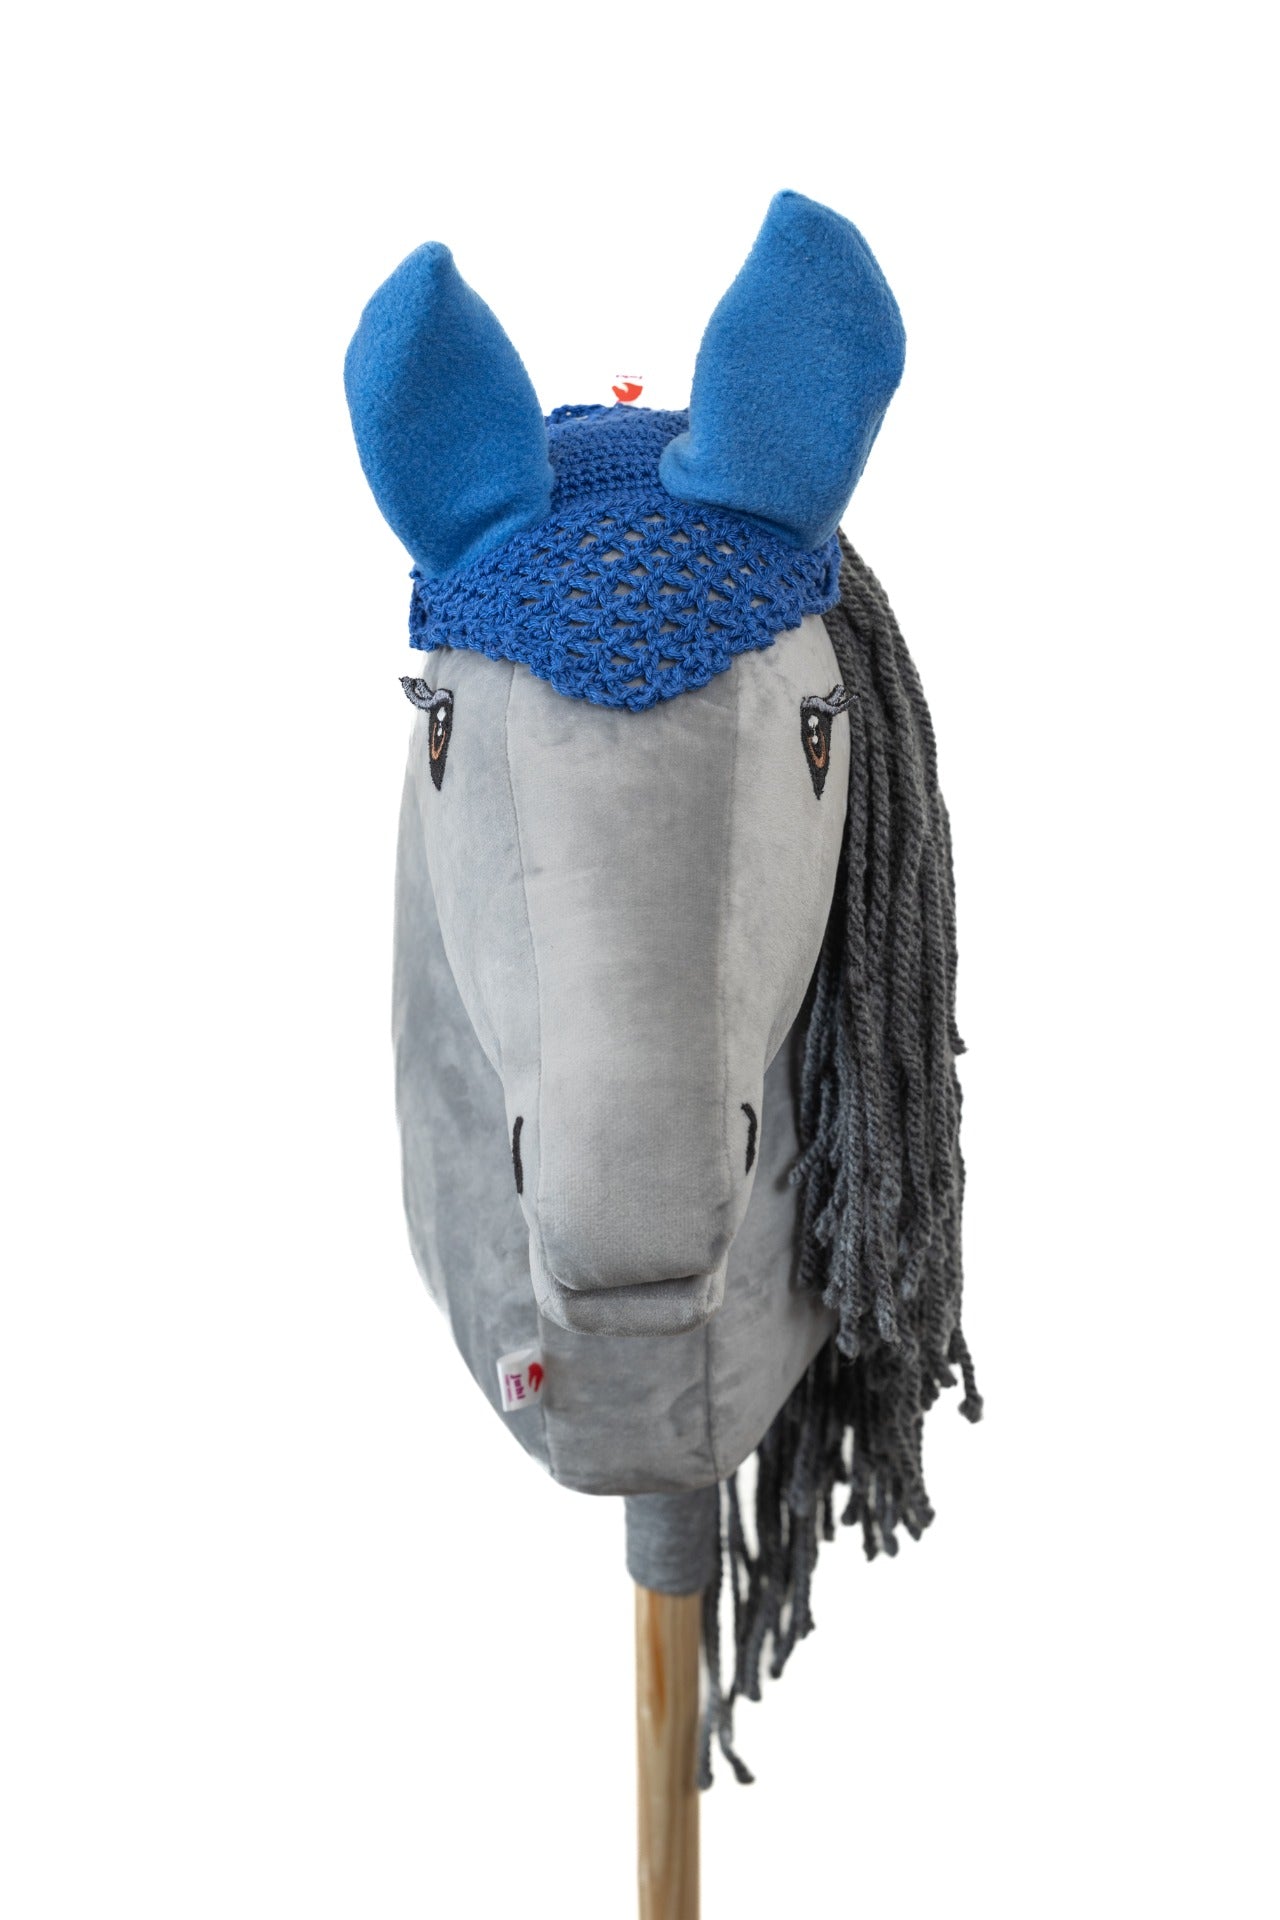 Ear net crocheted - Dark blue with blue ears - Adult horse